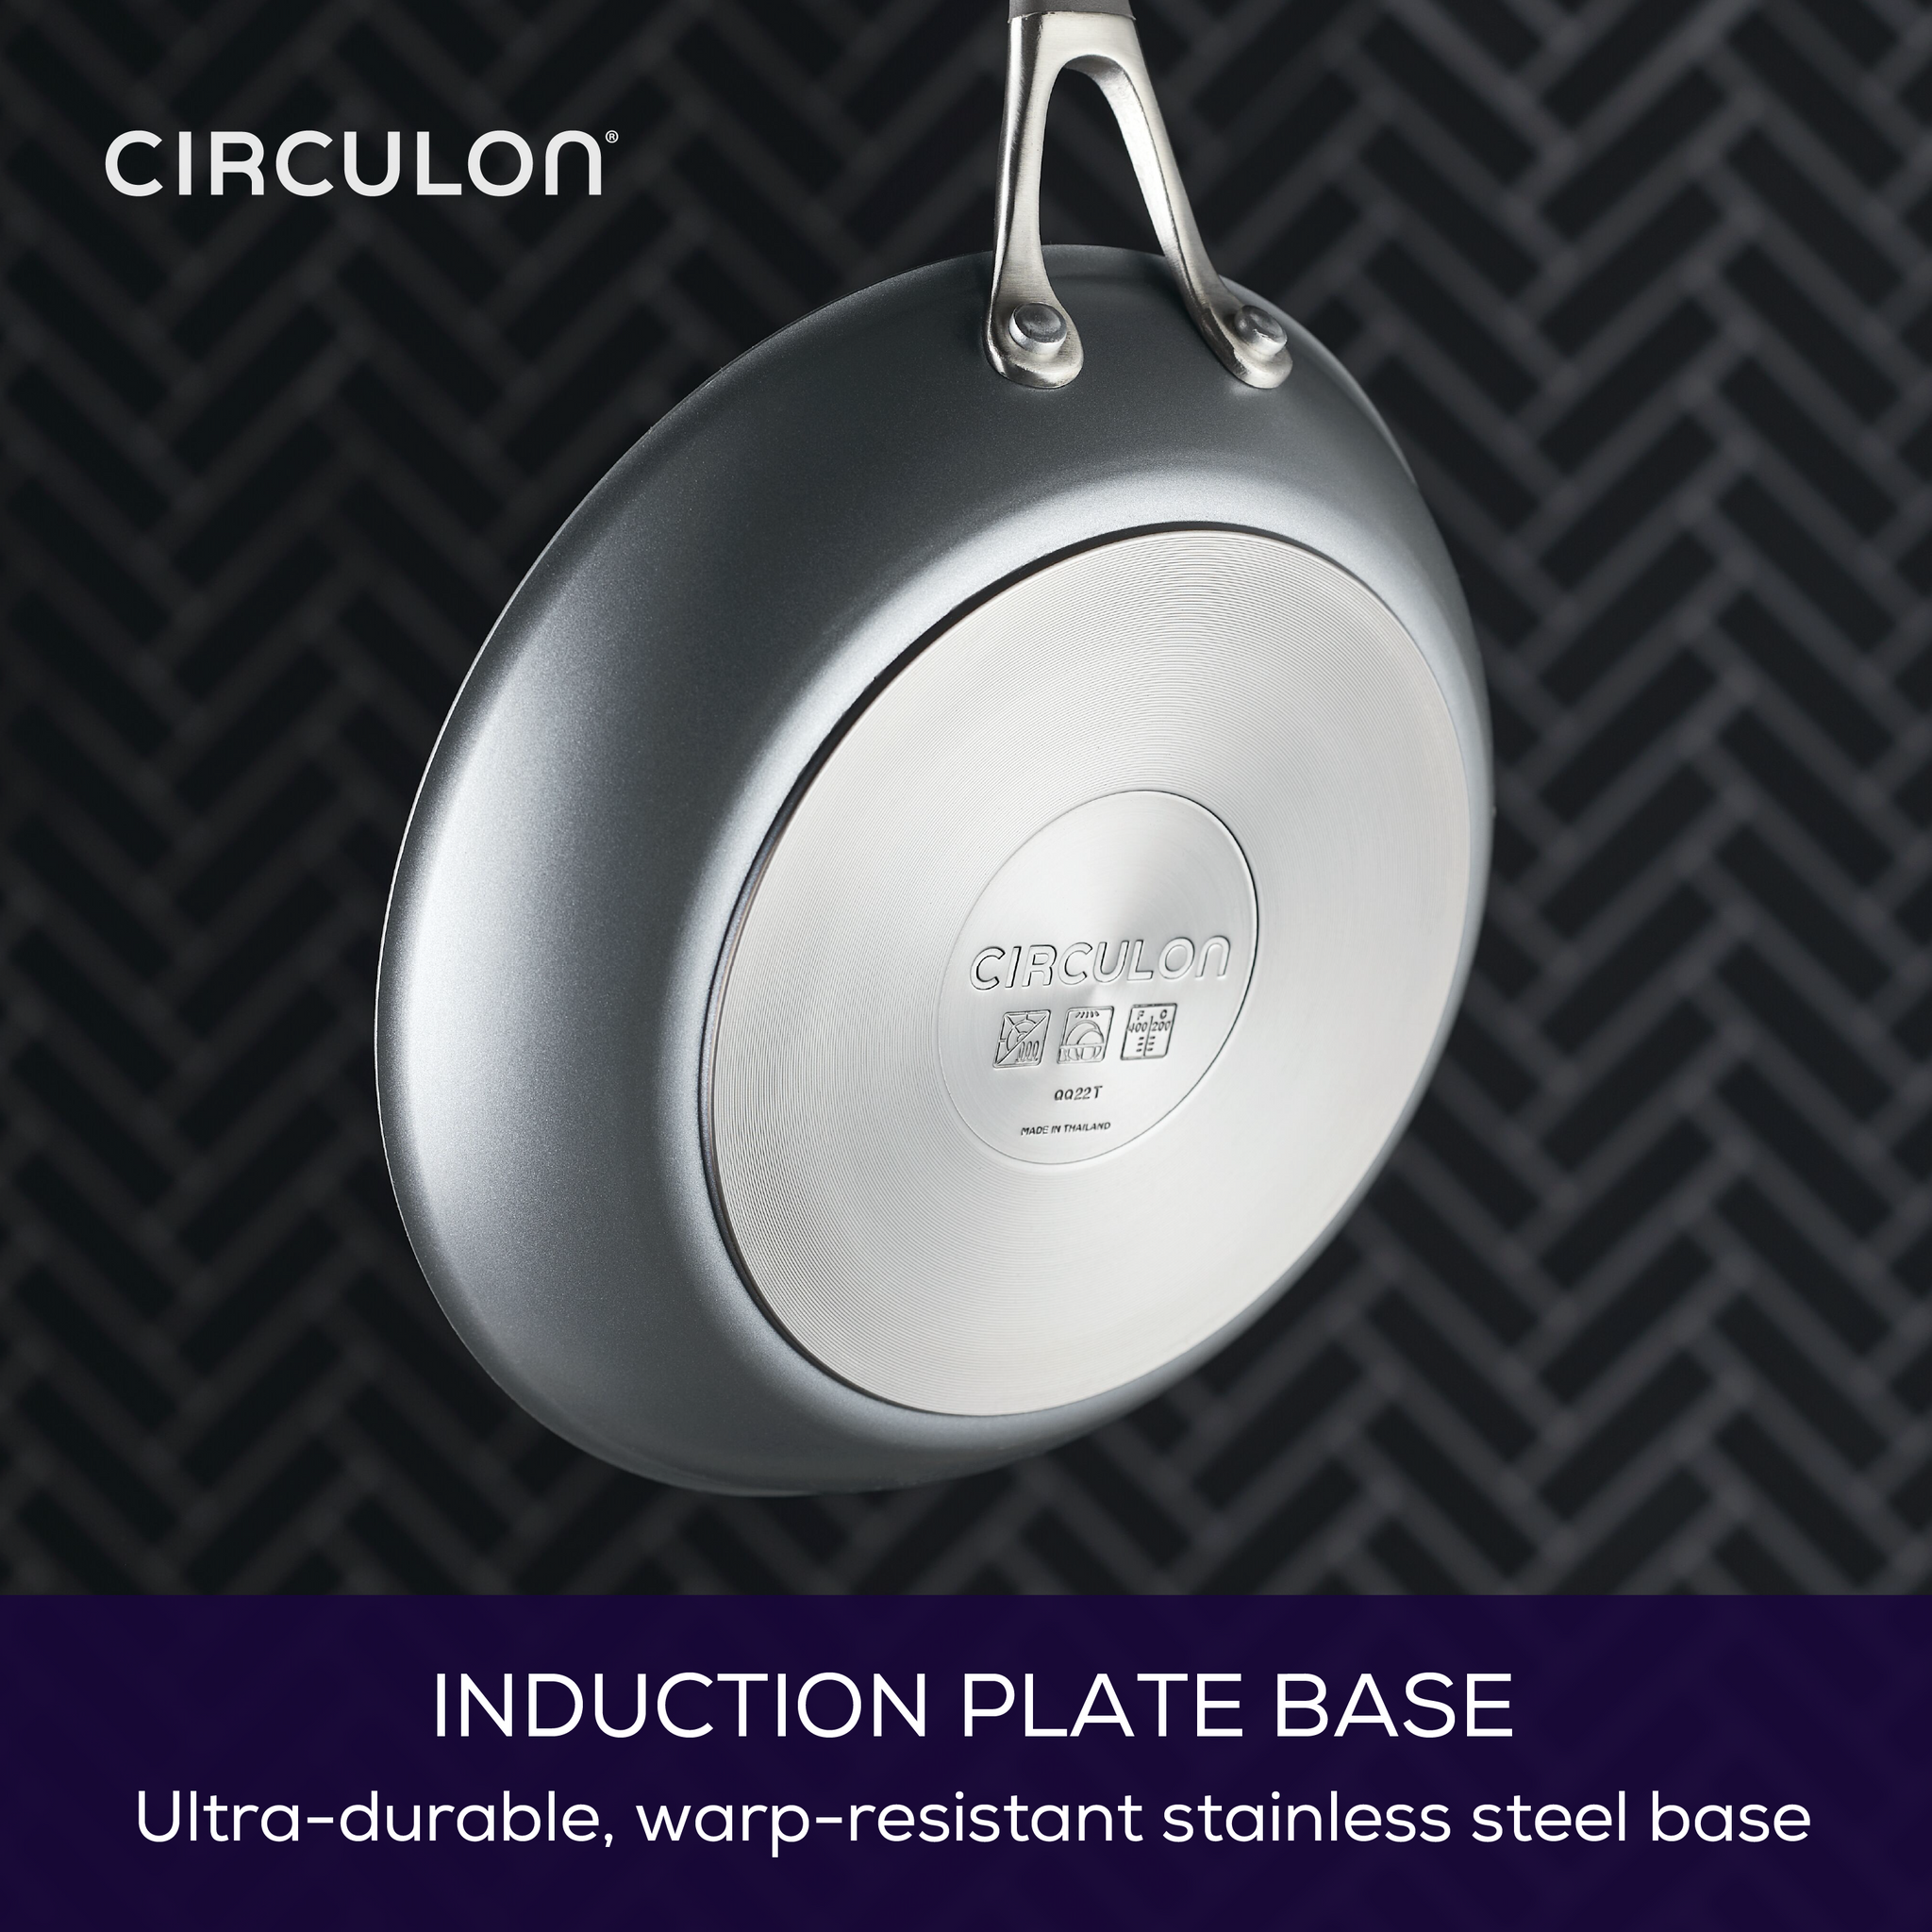 Circulon A1 Series-Scratch Defense Nonstick 9pc Cookware Set 